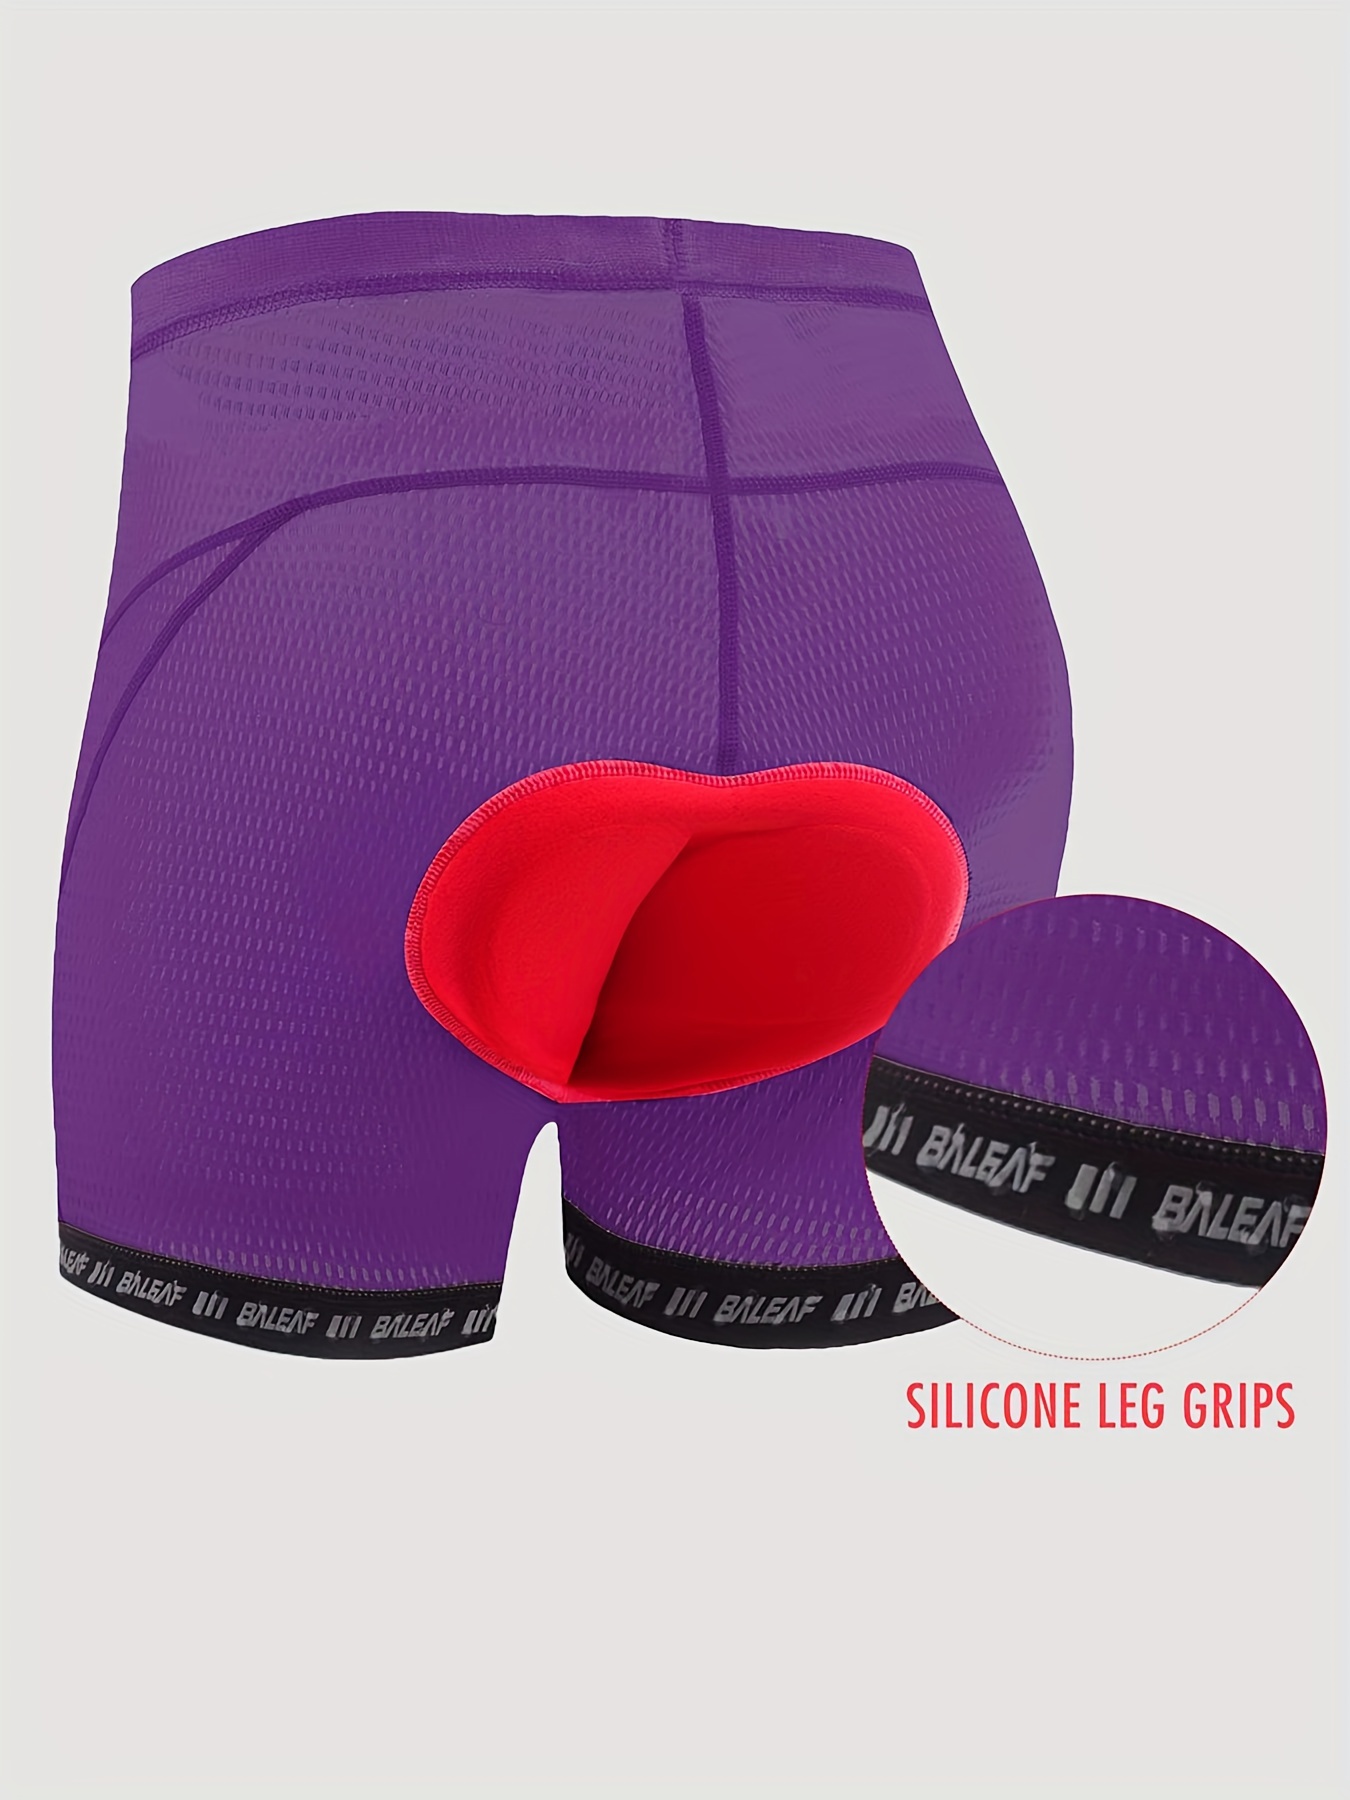 Buy BALEAF Women's Cycling Underwear Padded Bike Shorts